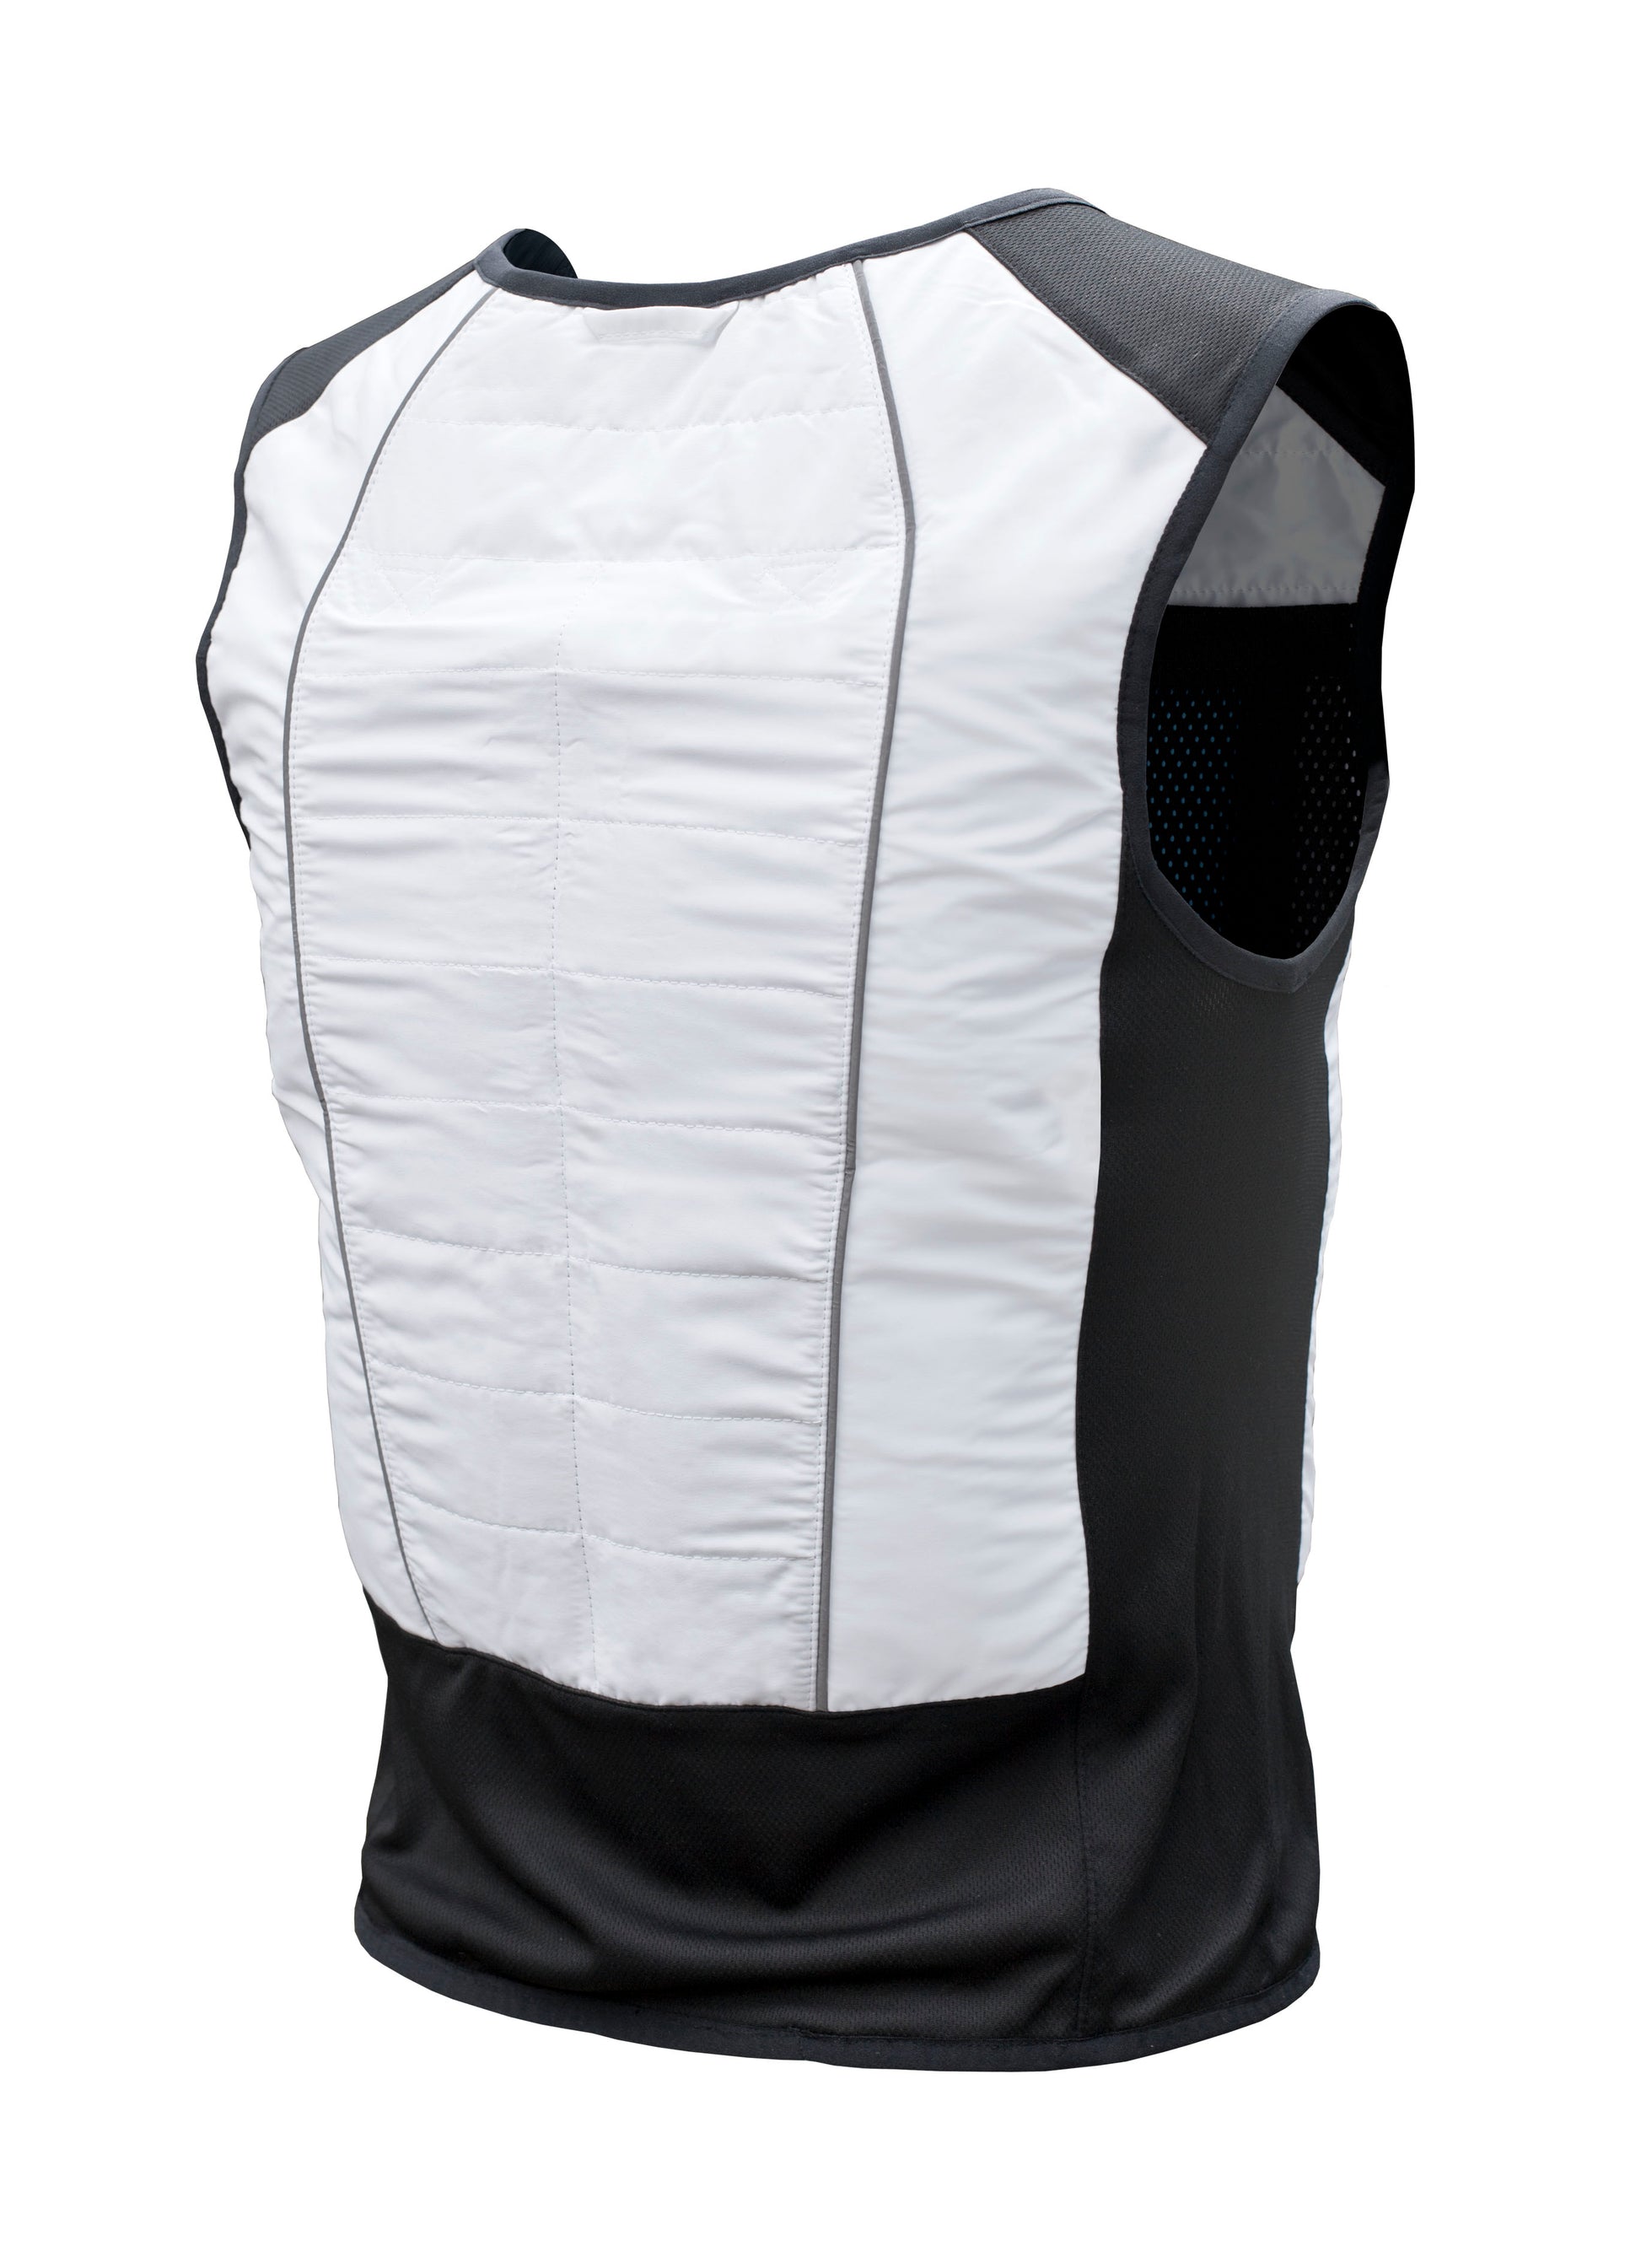 Complete Cooling Vest | EZCooldown